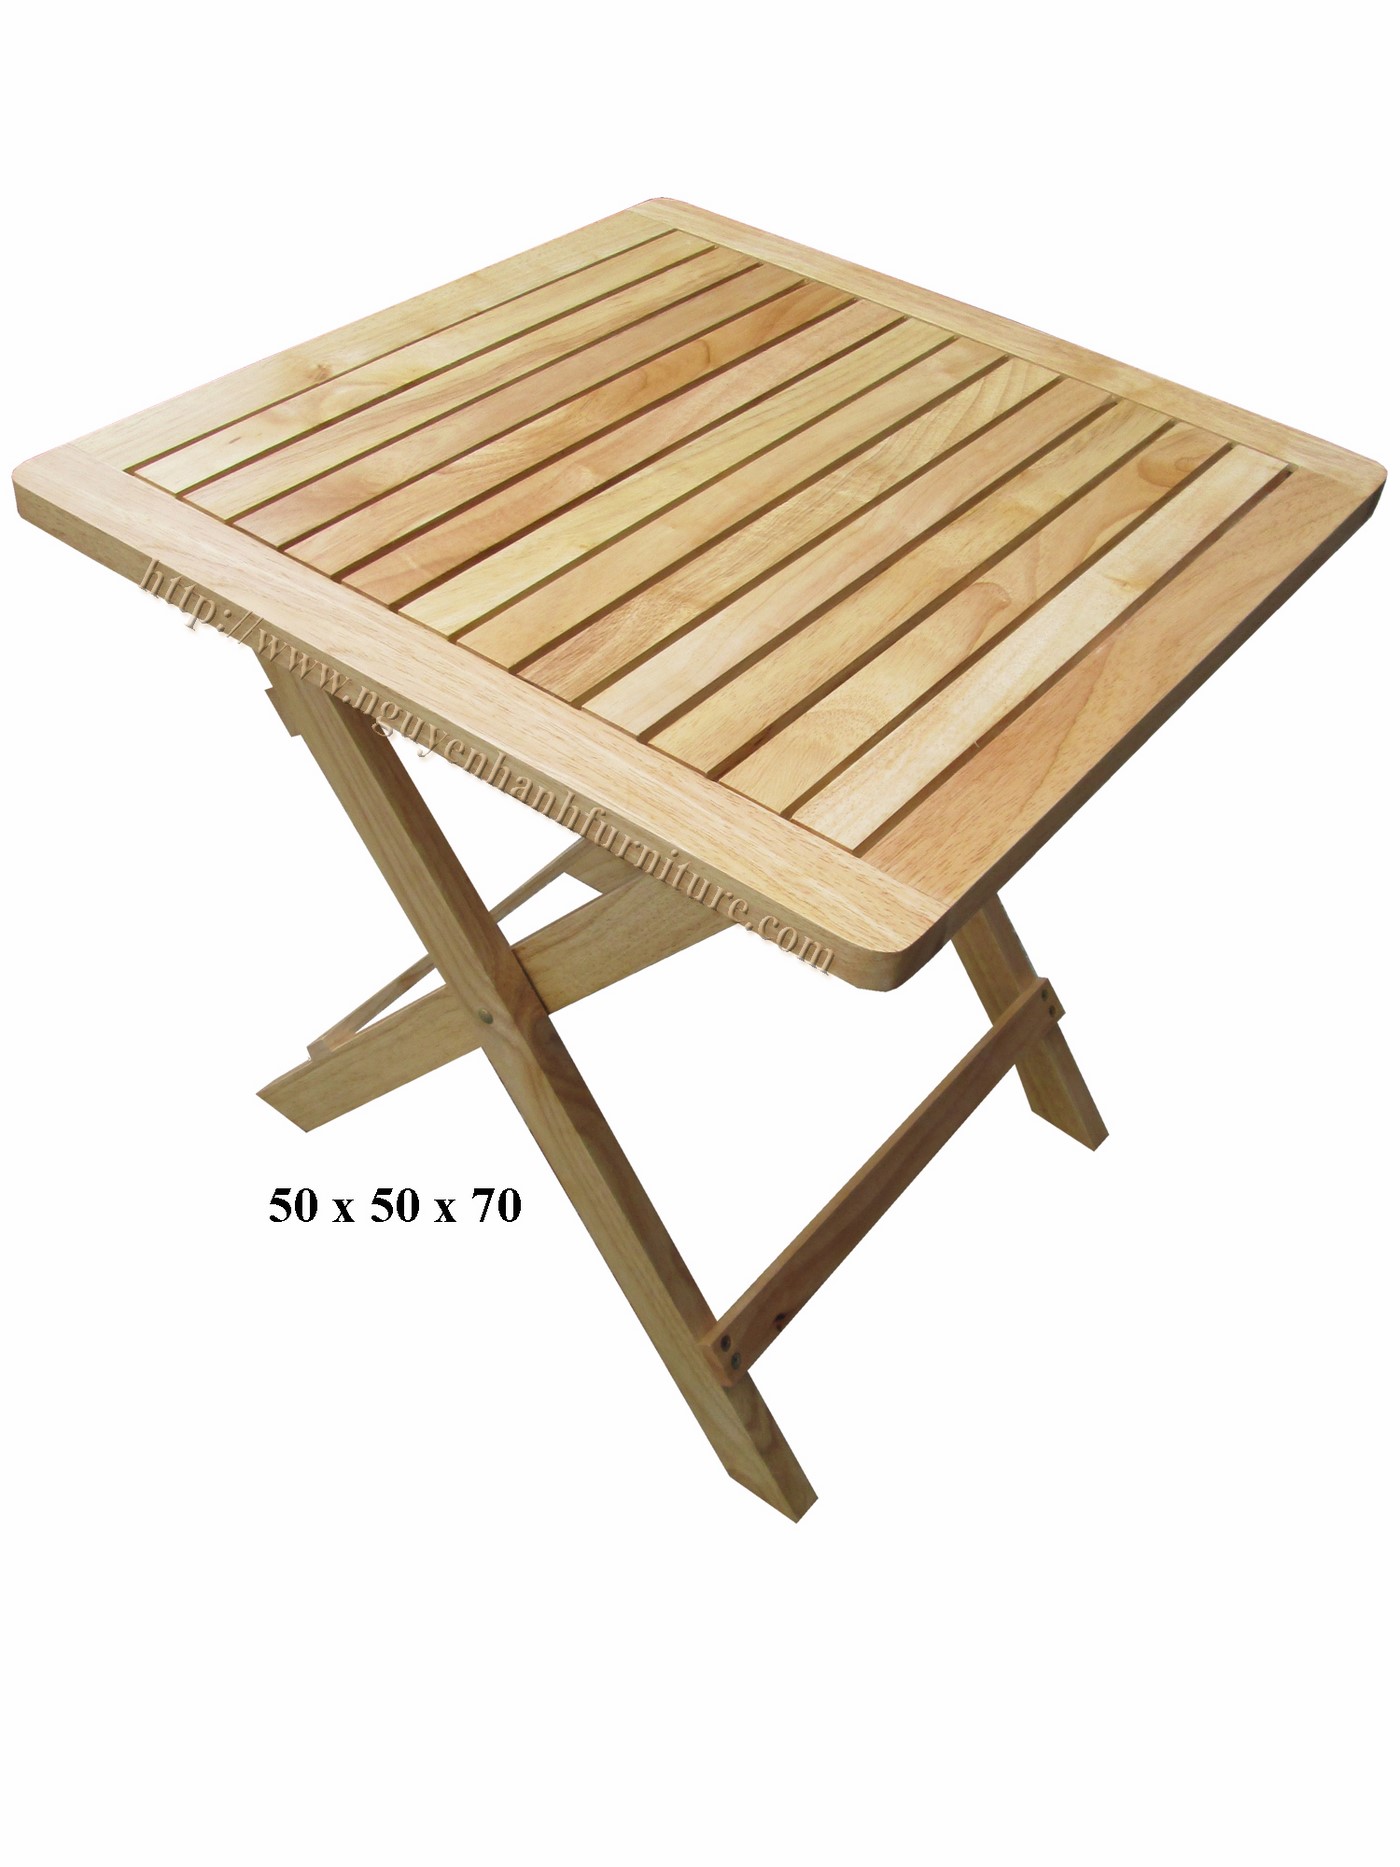 Name product: Folding table (Natural) - Dimensions:50 x 50 x 51 cm - Description: Wood natural rubber